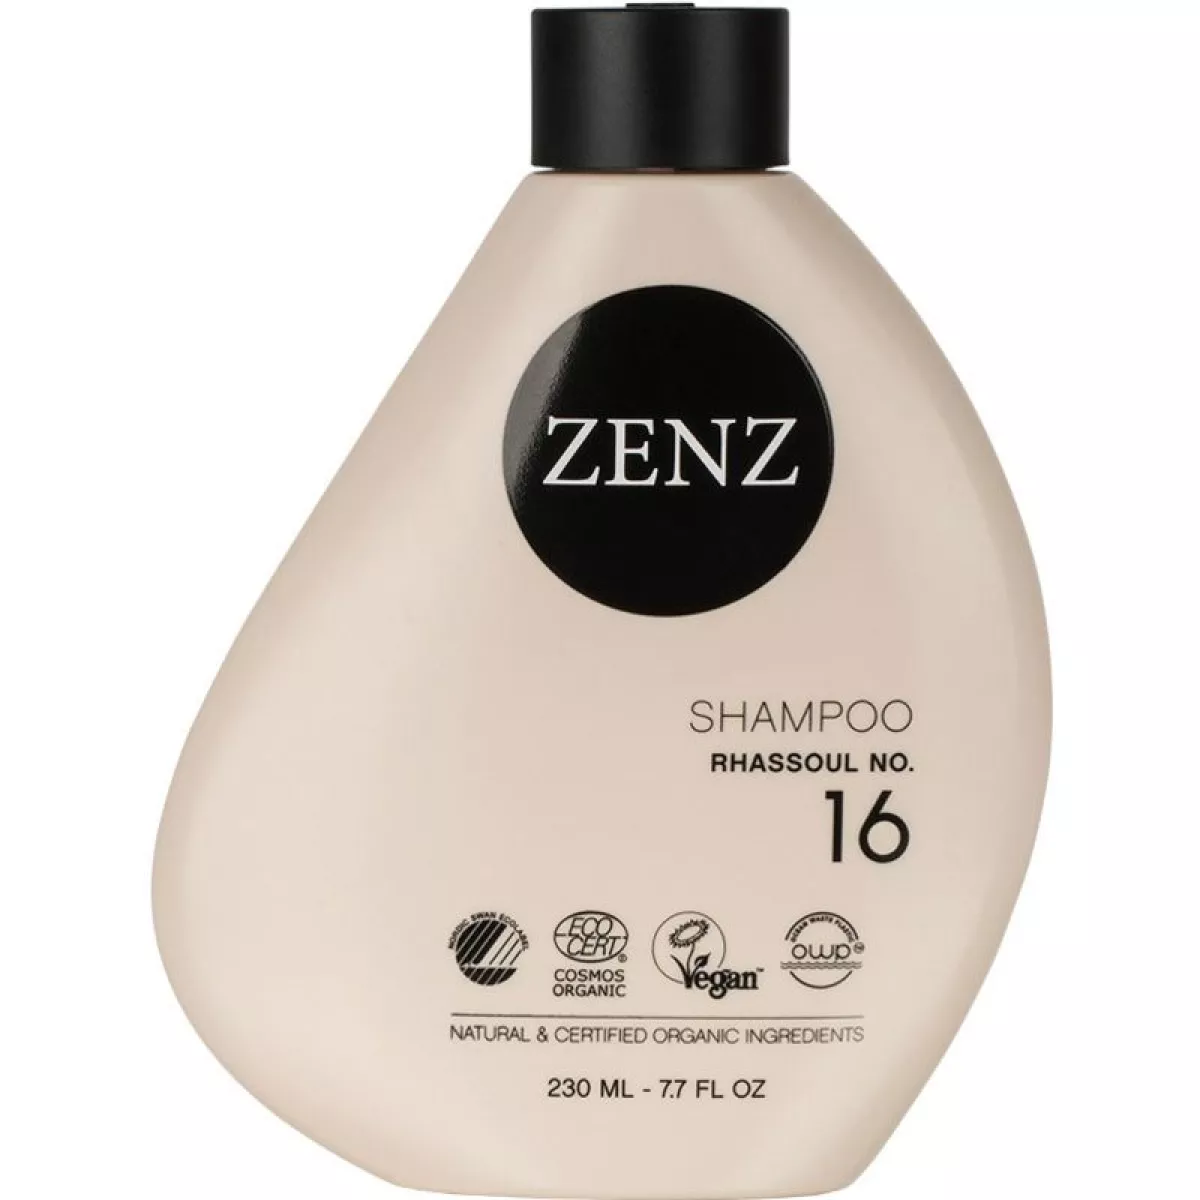 #2 - ZENZ Organic Rhassoul No. 16 Shampoo 230 ml